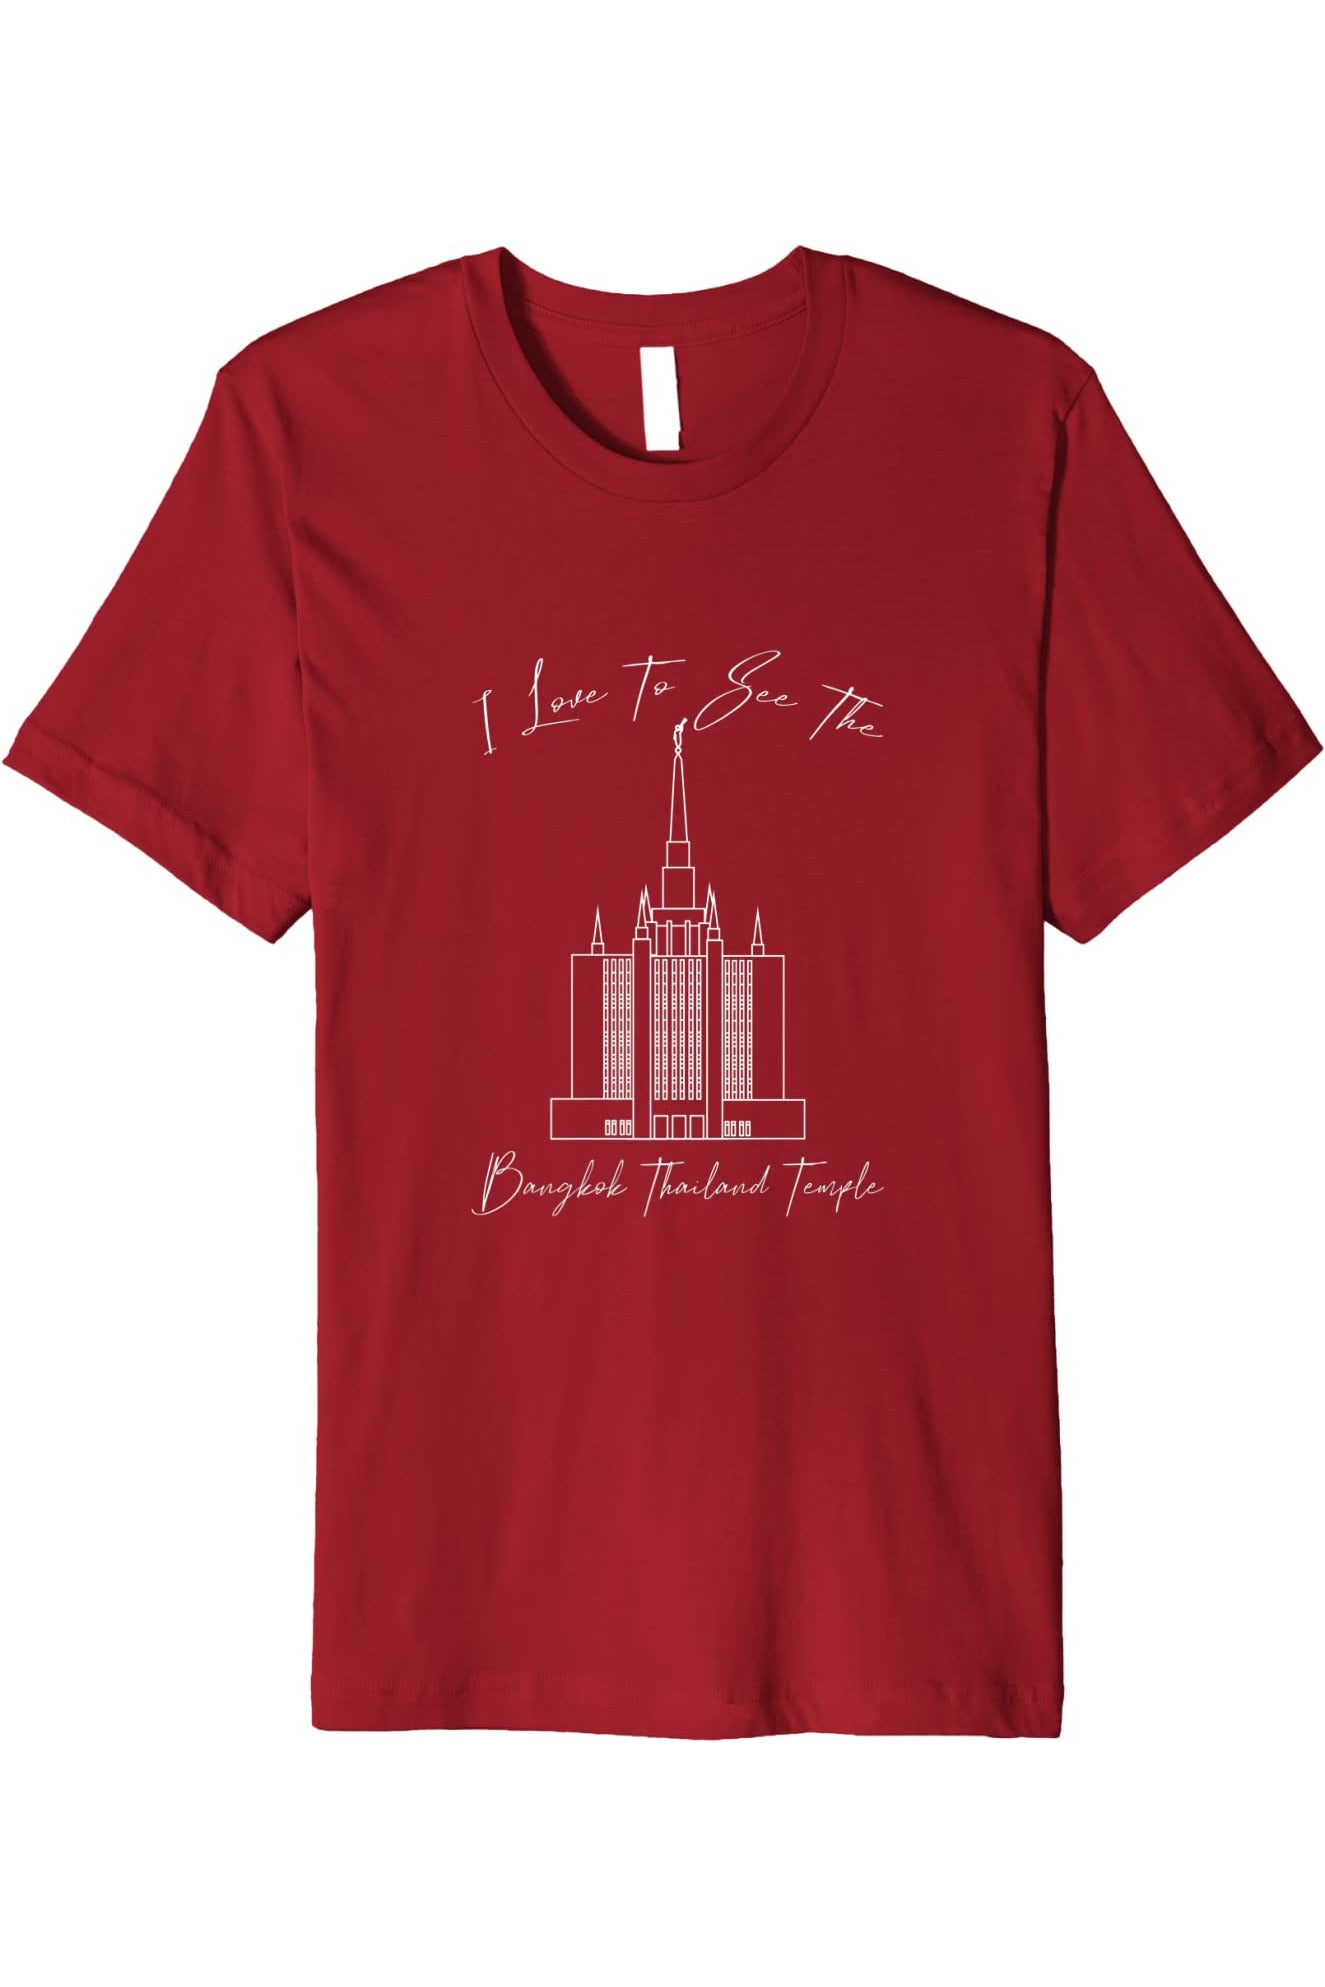 Bangkok Thailand Temple T-Shirt - Premium - Calligraphy Style (English) US